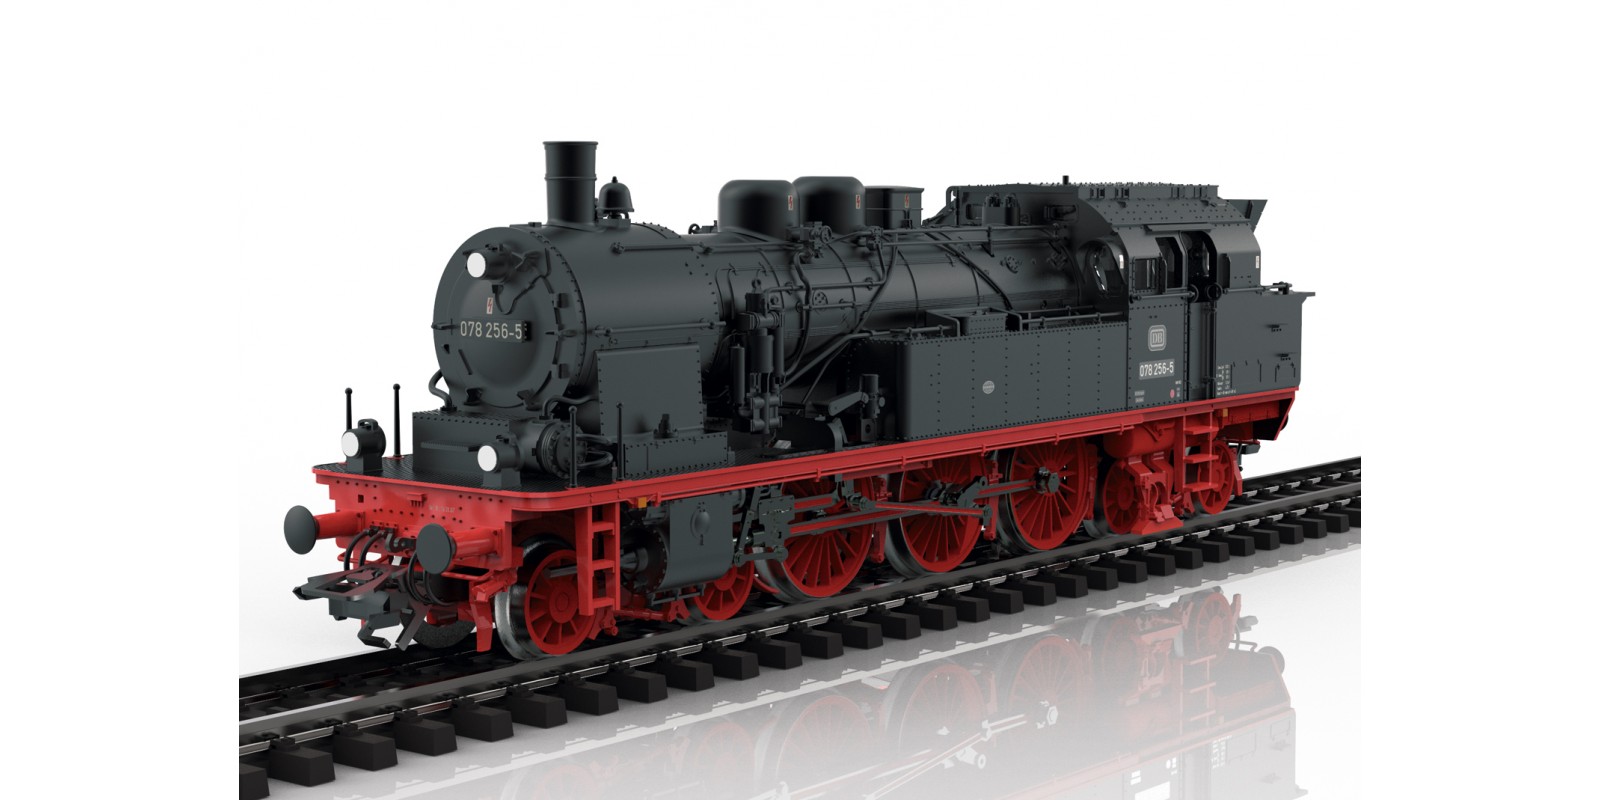 39785 Class 078 Steam Locomotive